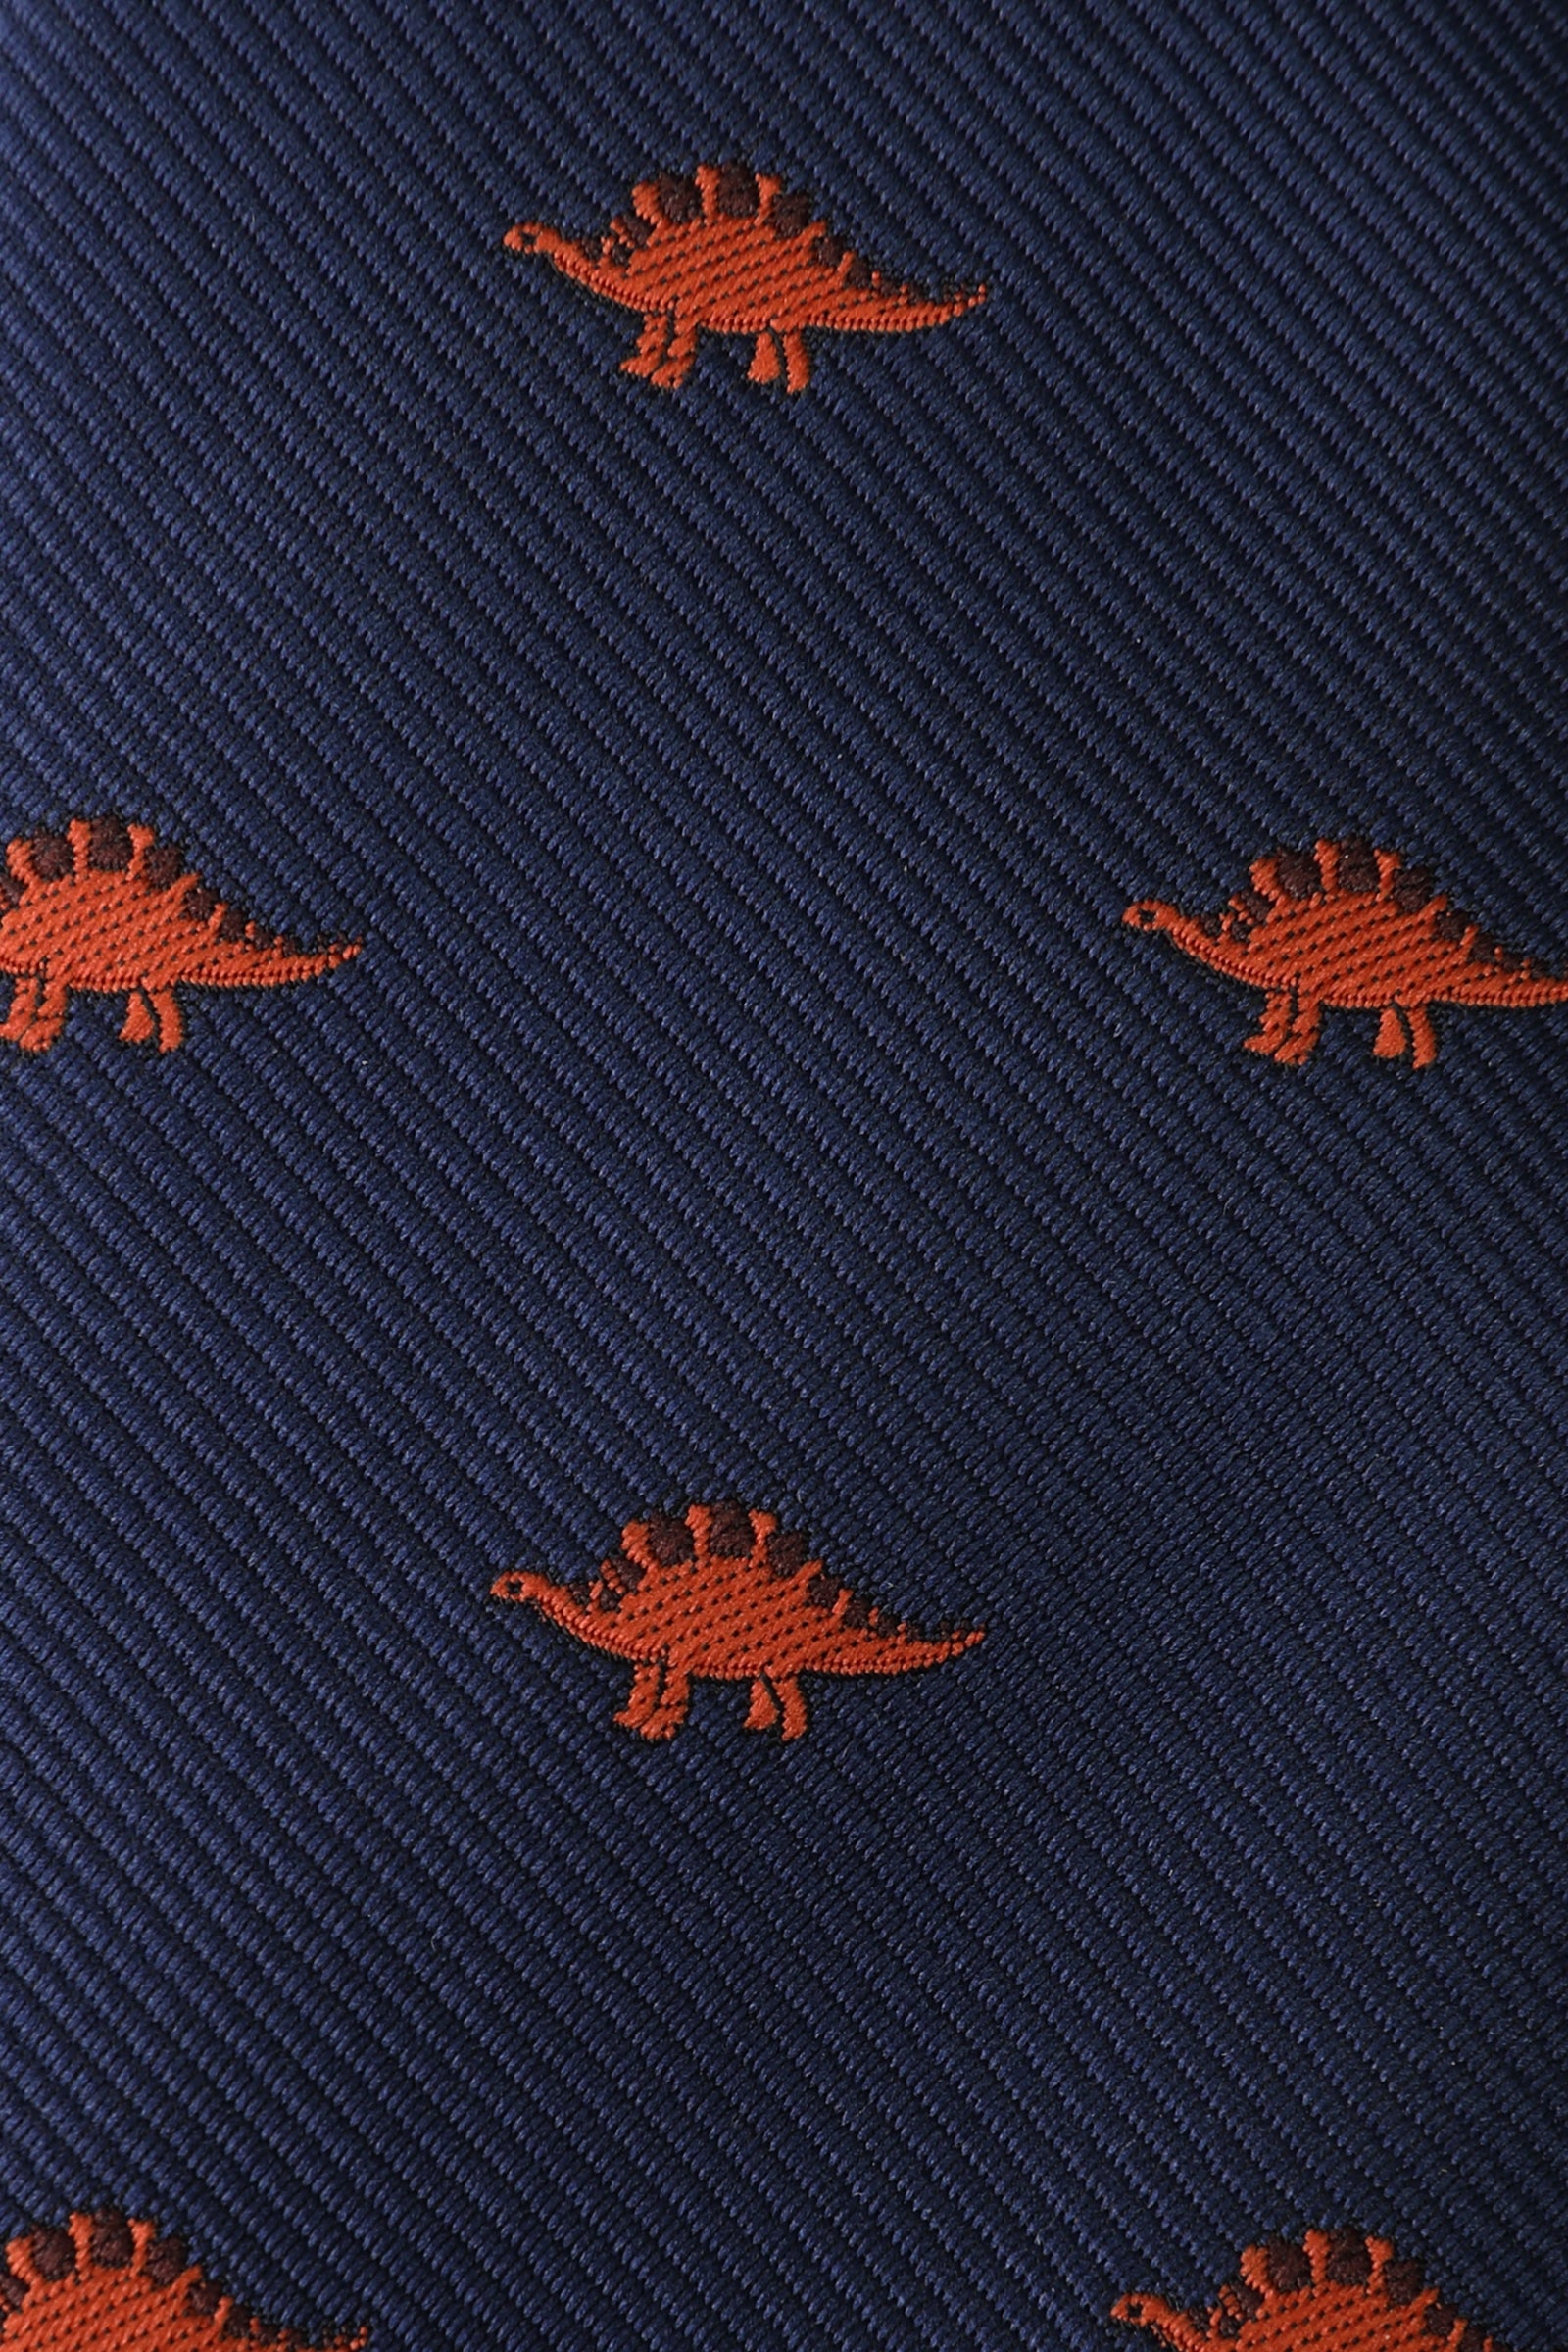 Stegosaurus Dinosaur Kids Necktie Fabric